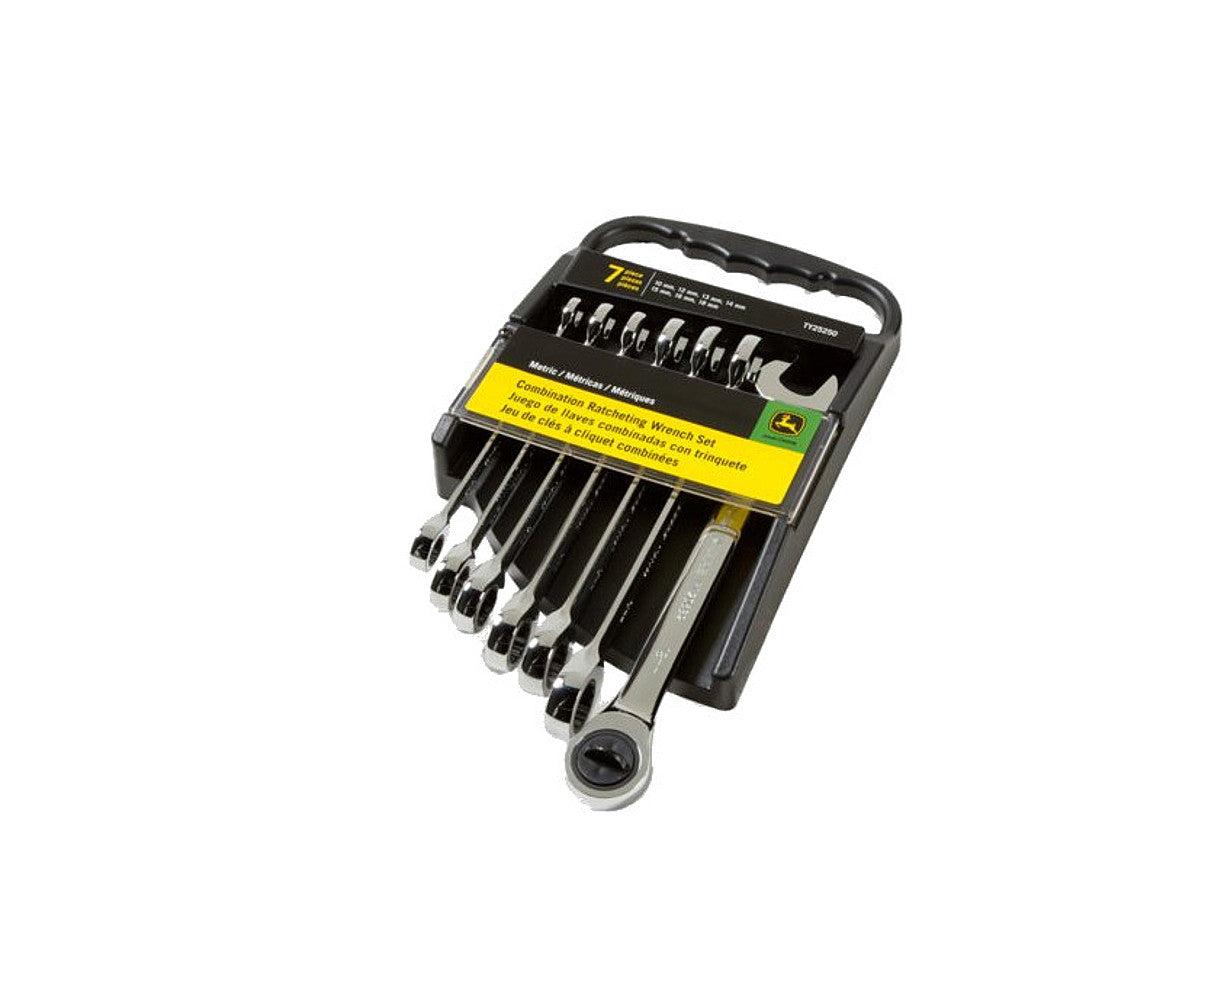 7 Piece John Deere Metric Offset Ratcheting Combination Wrench Set - TY26999